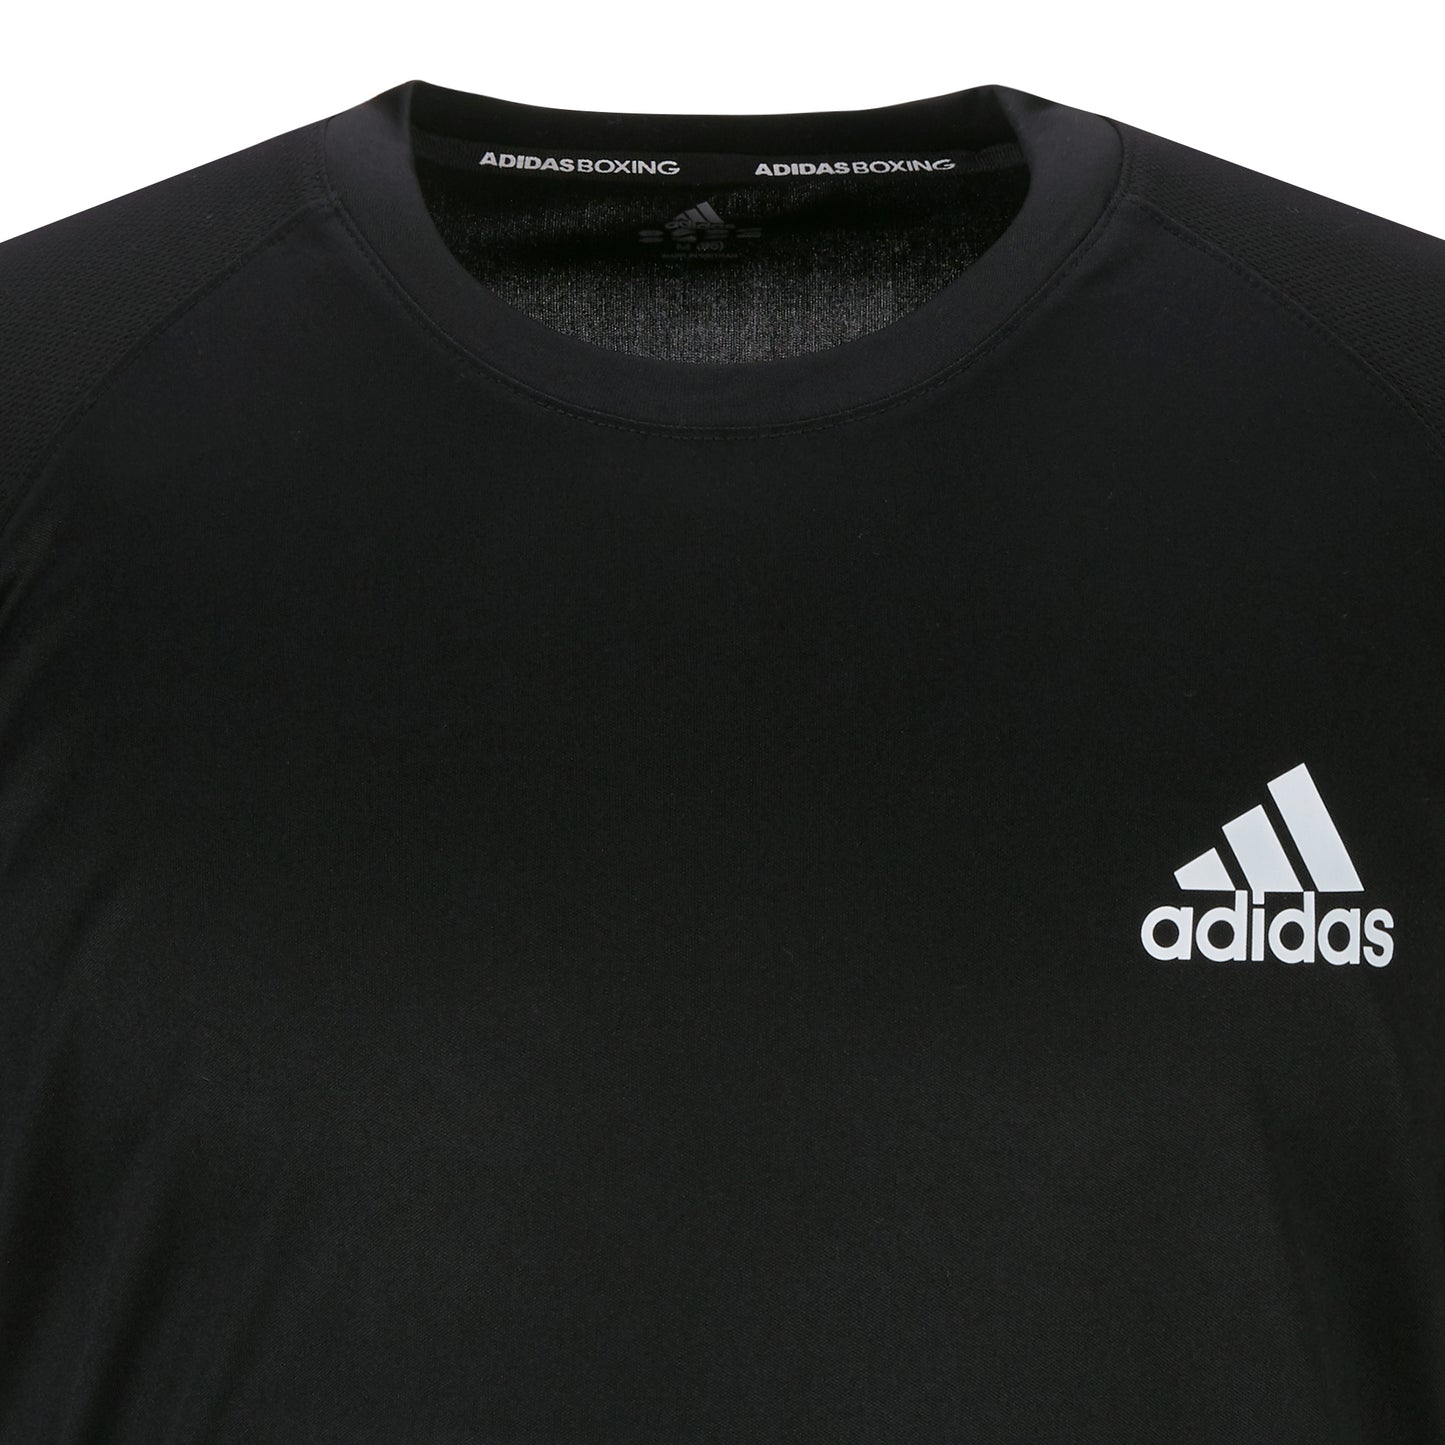 Bxwtts01 Adidas Boxwear Tech T Shirt Black 03